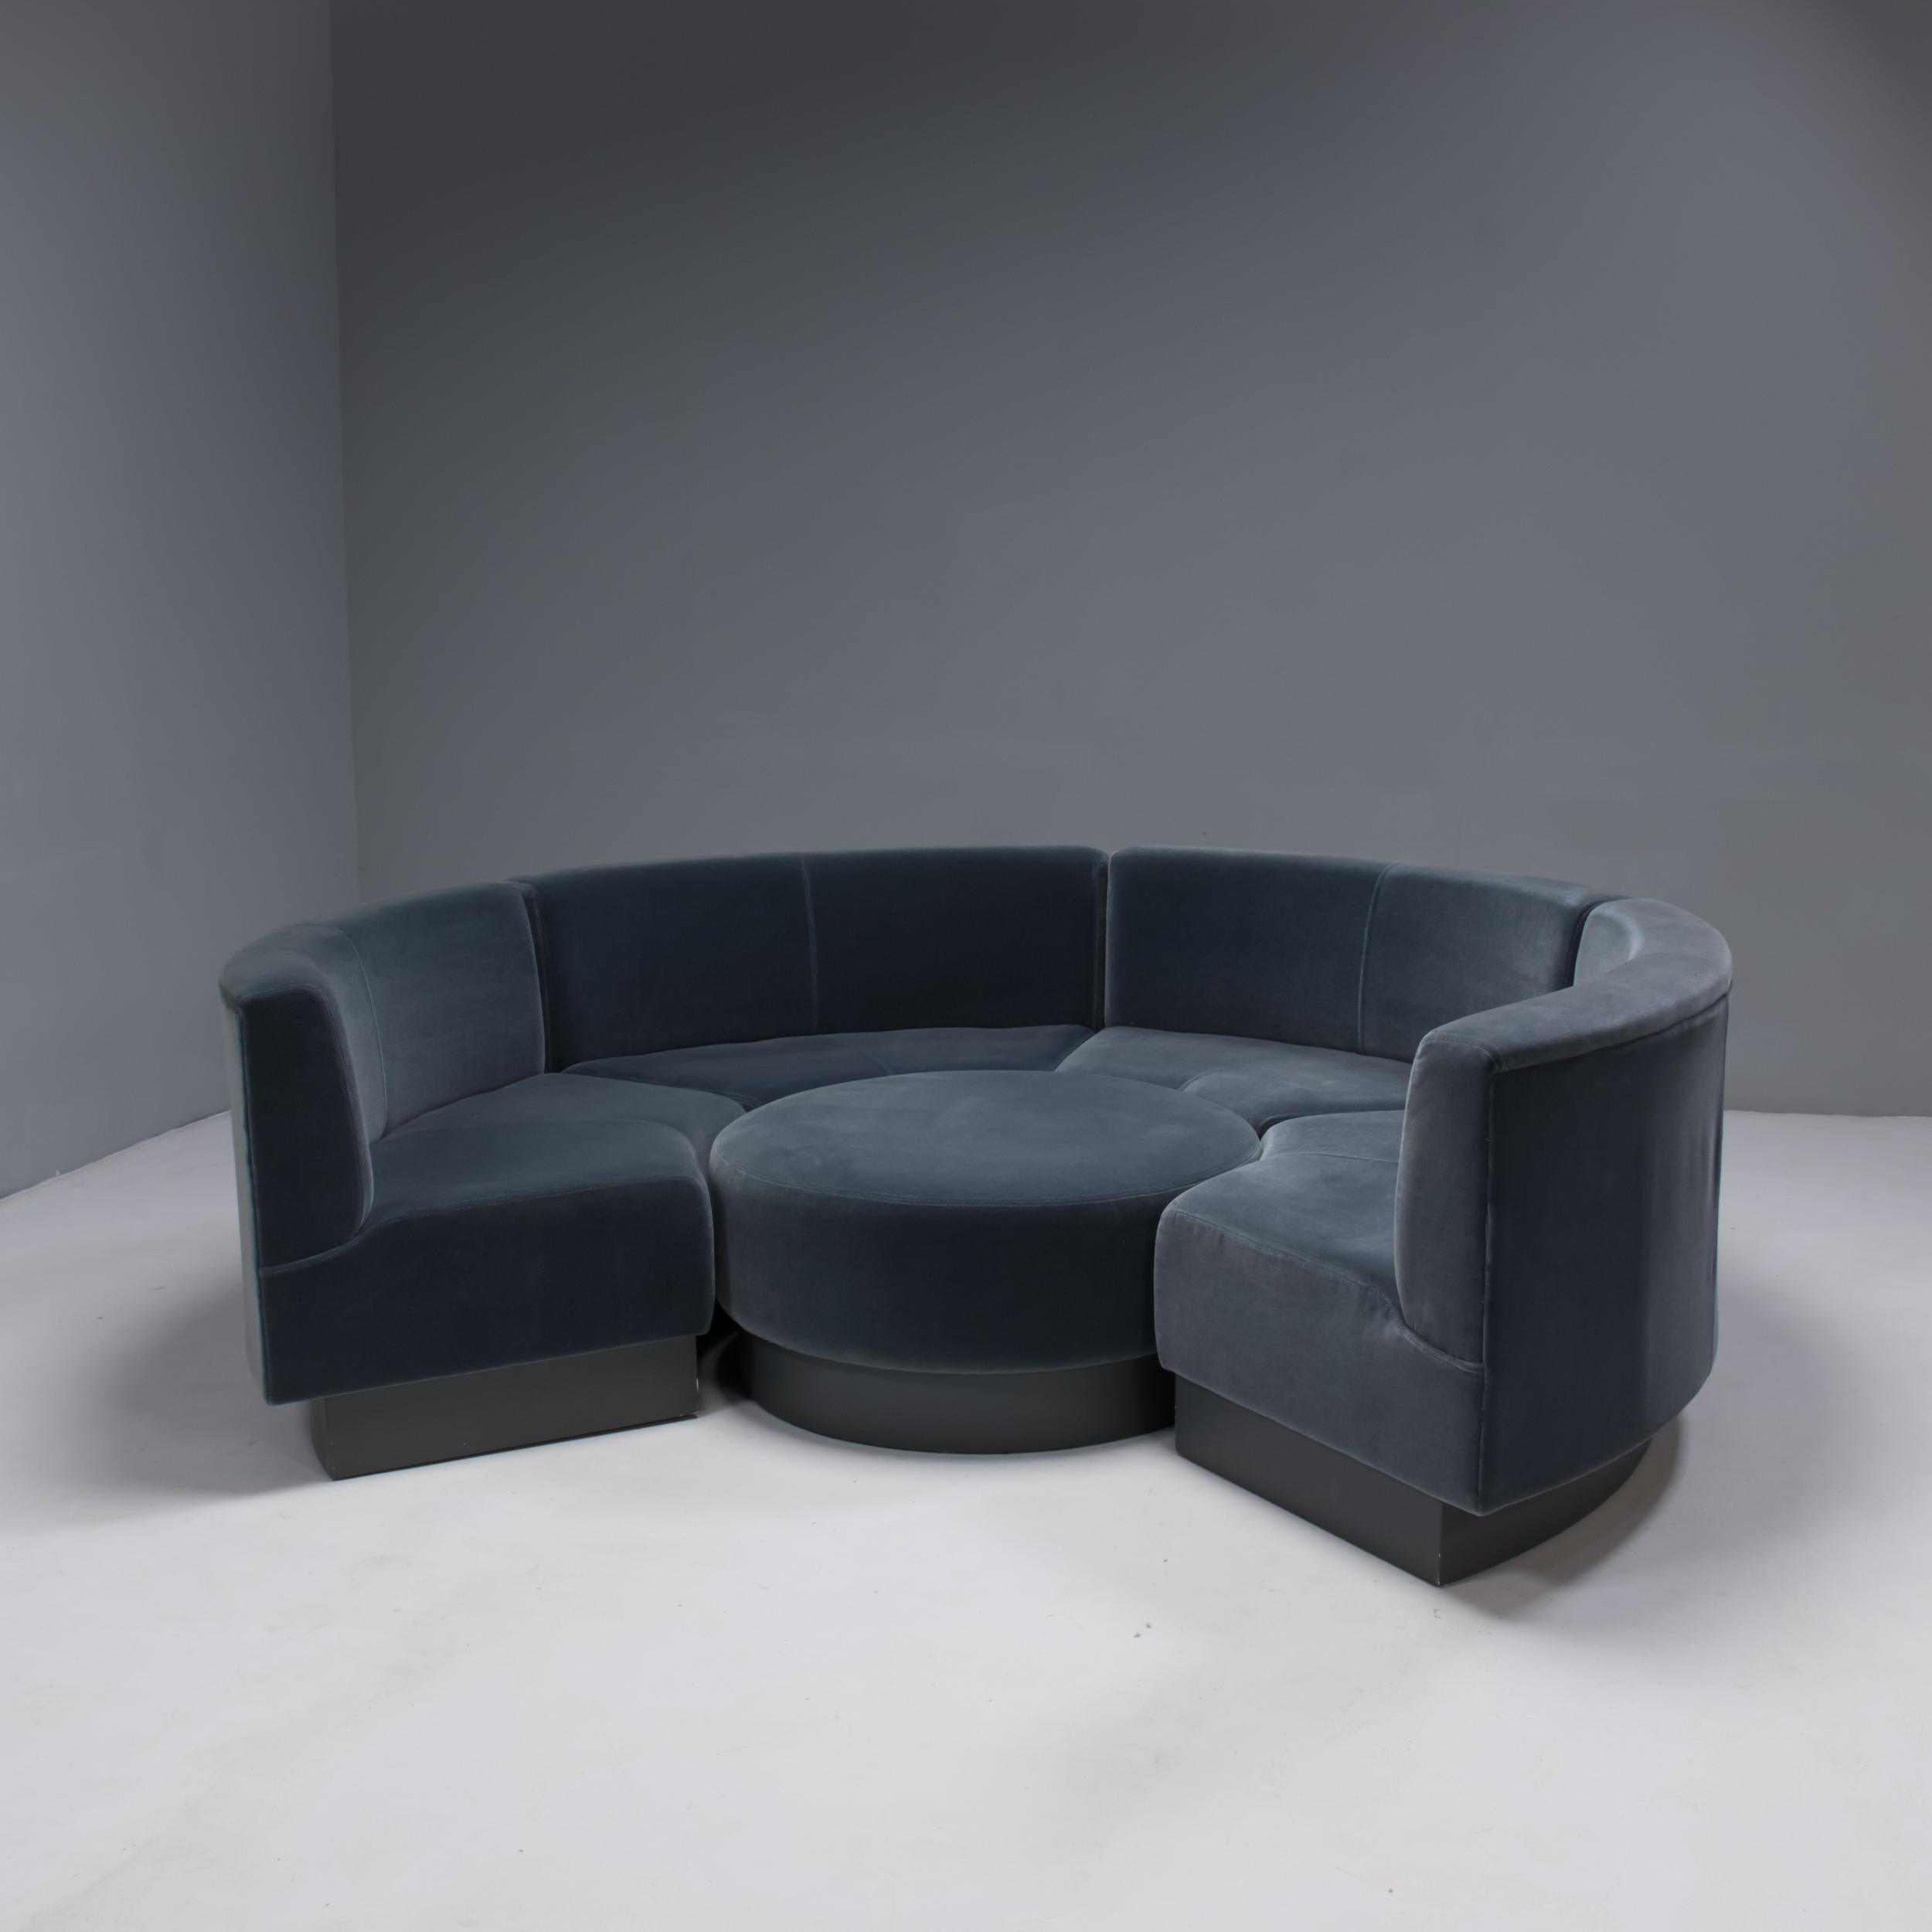 semi circular sofa dimensions